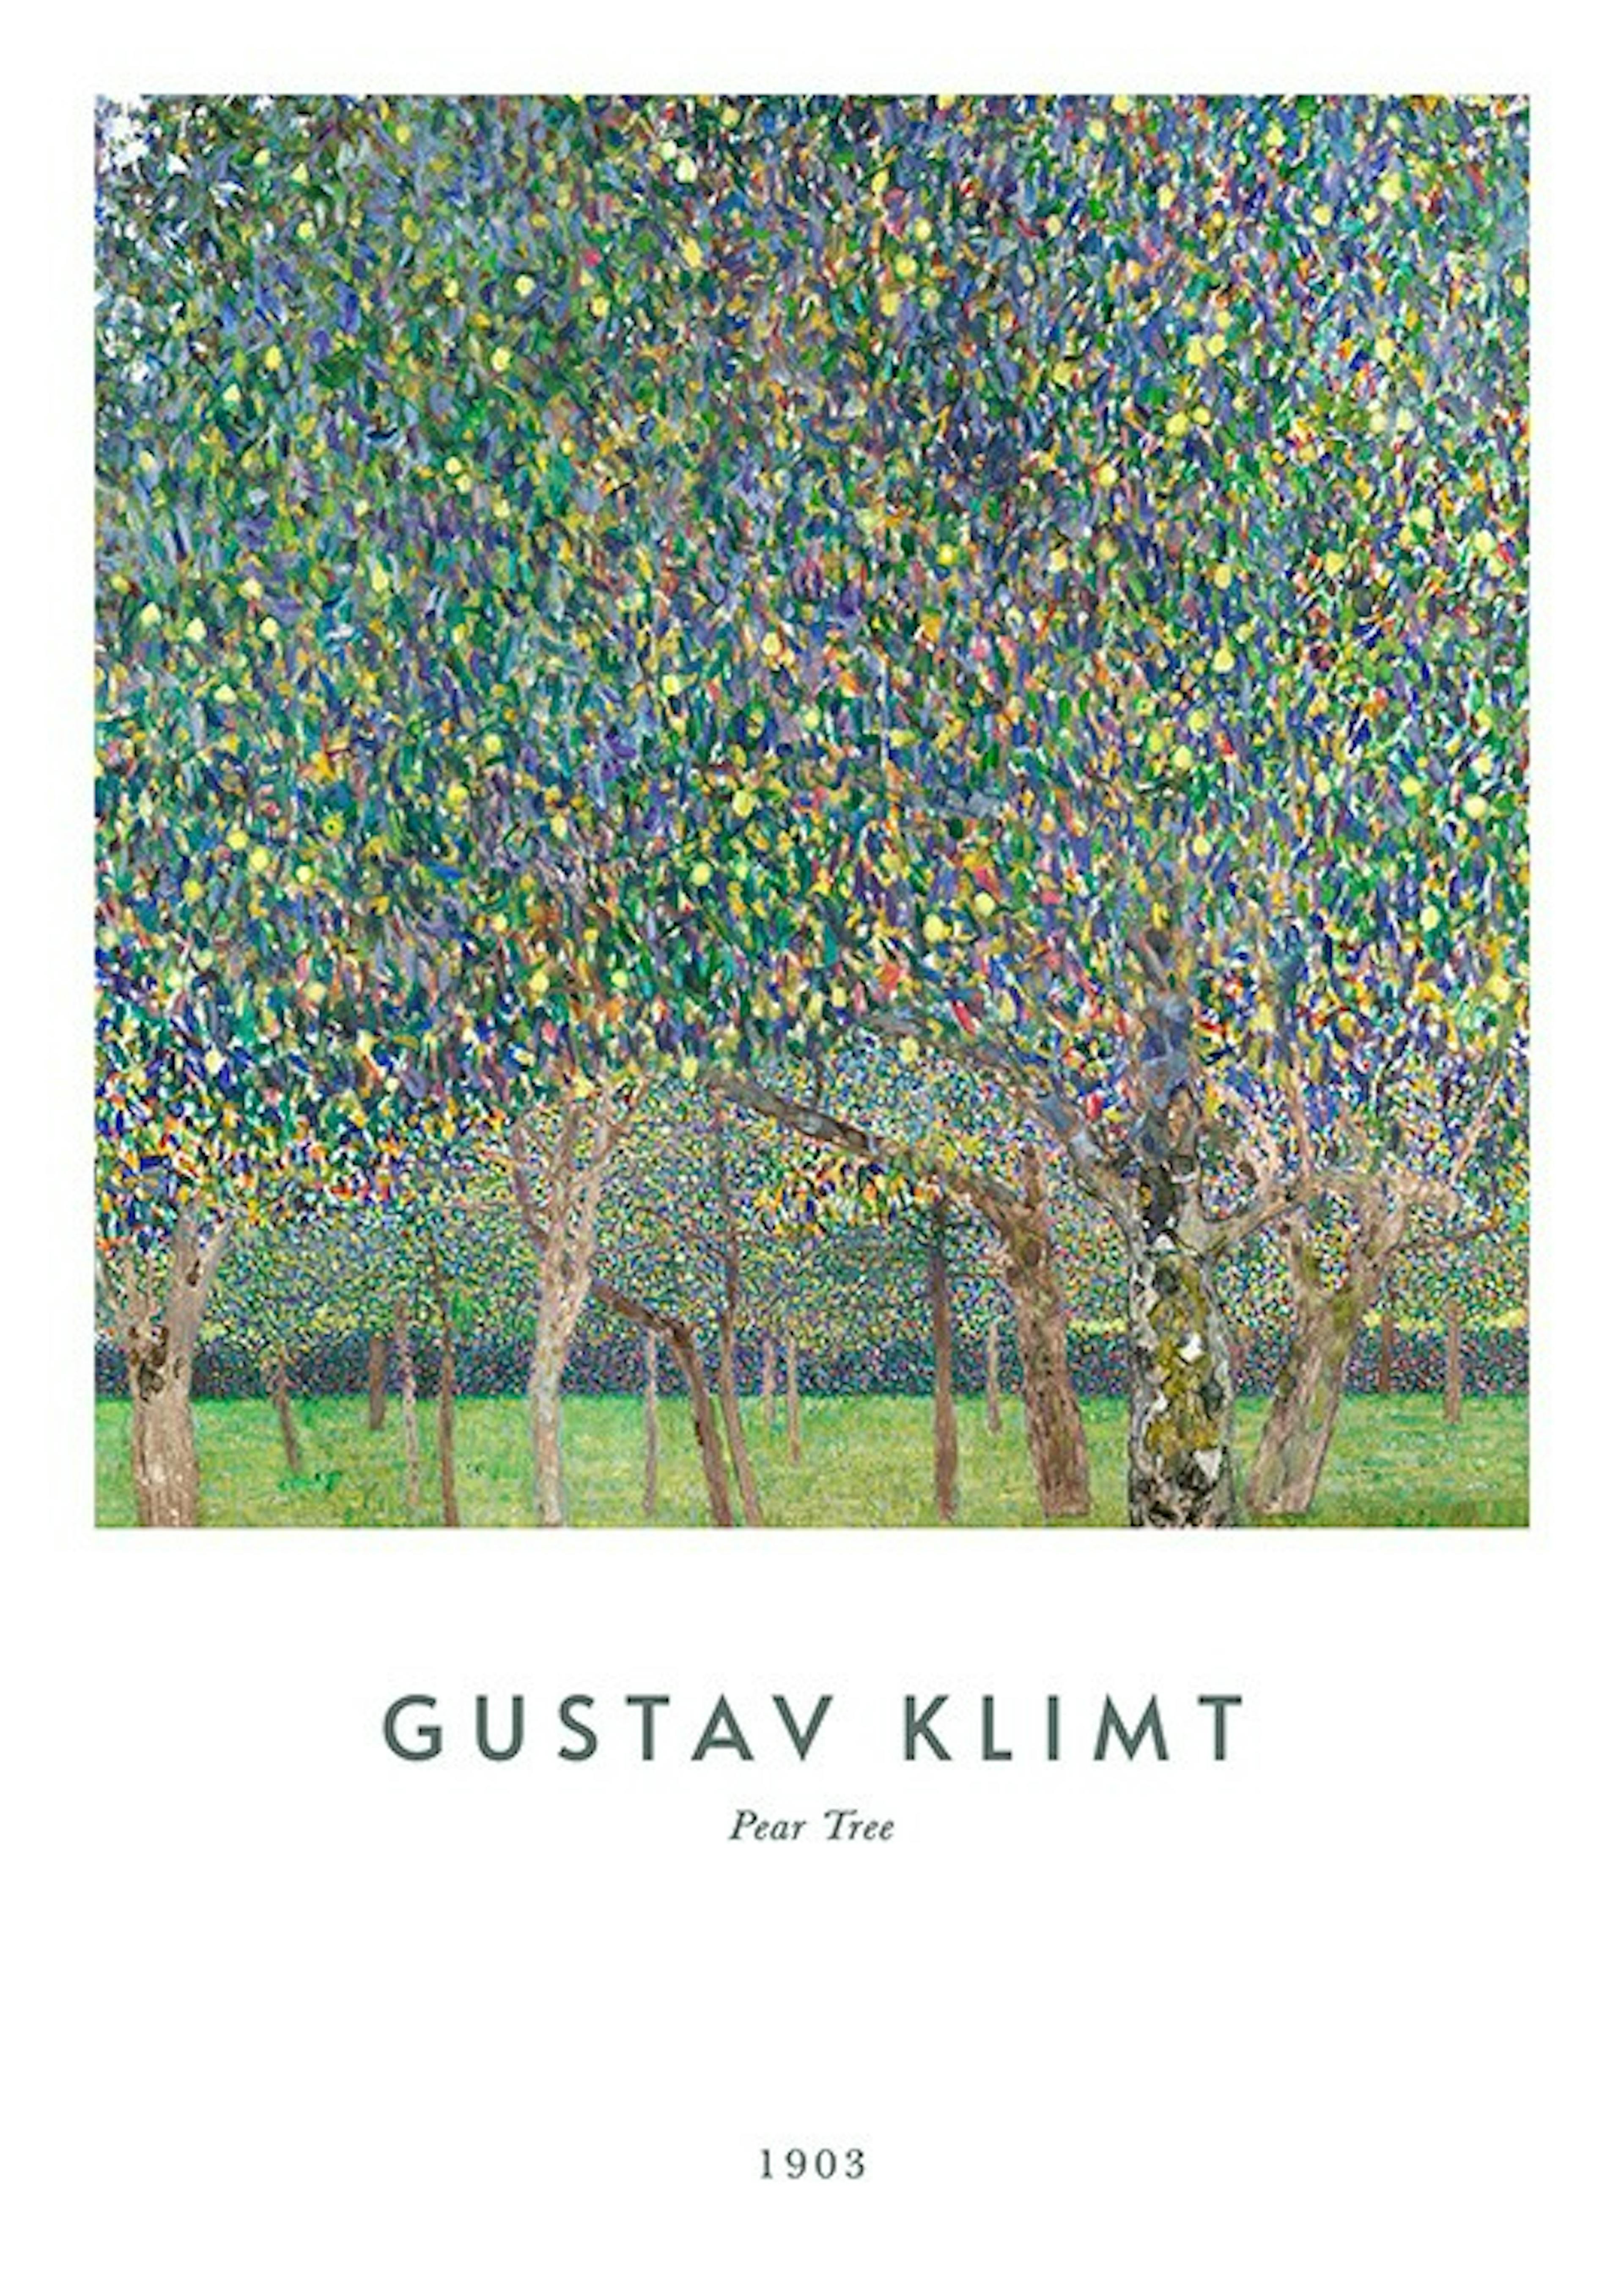 Gustav Klimt - Pear Tree Print